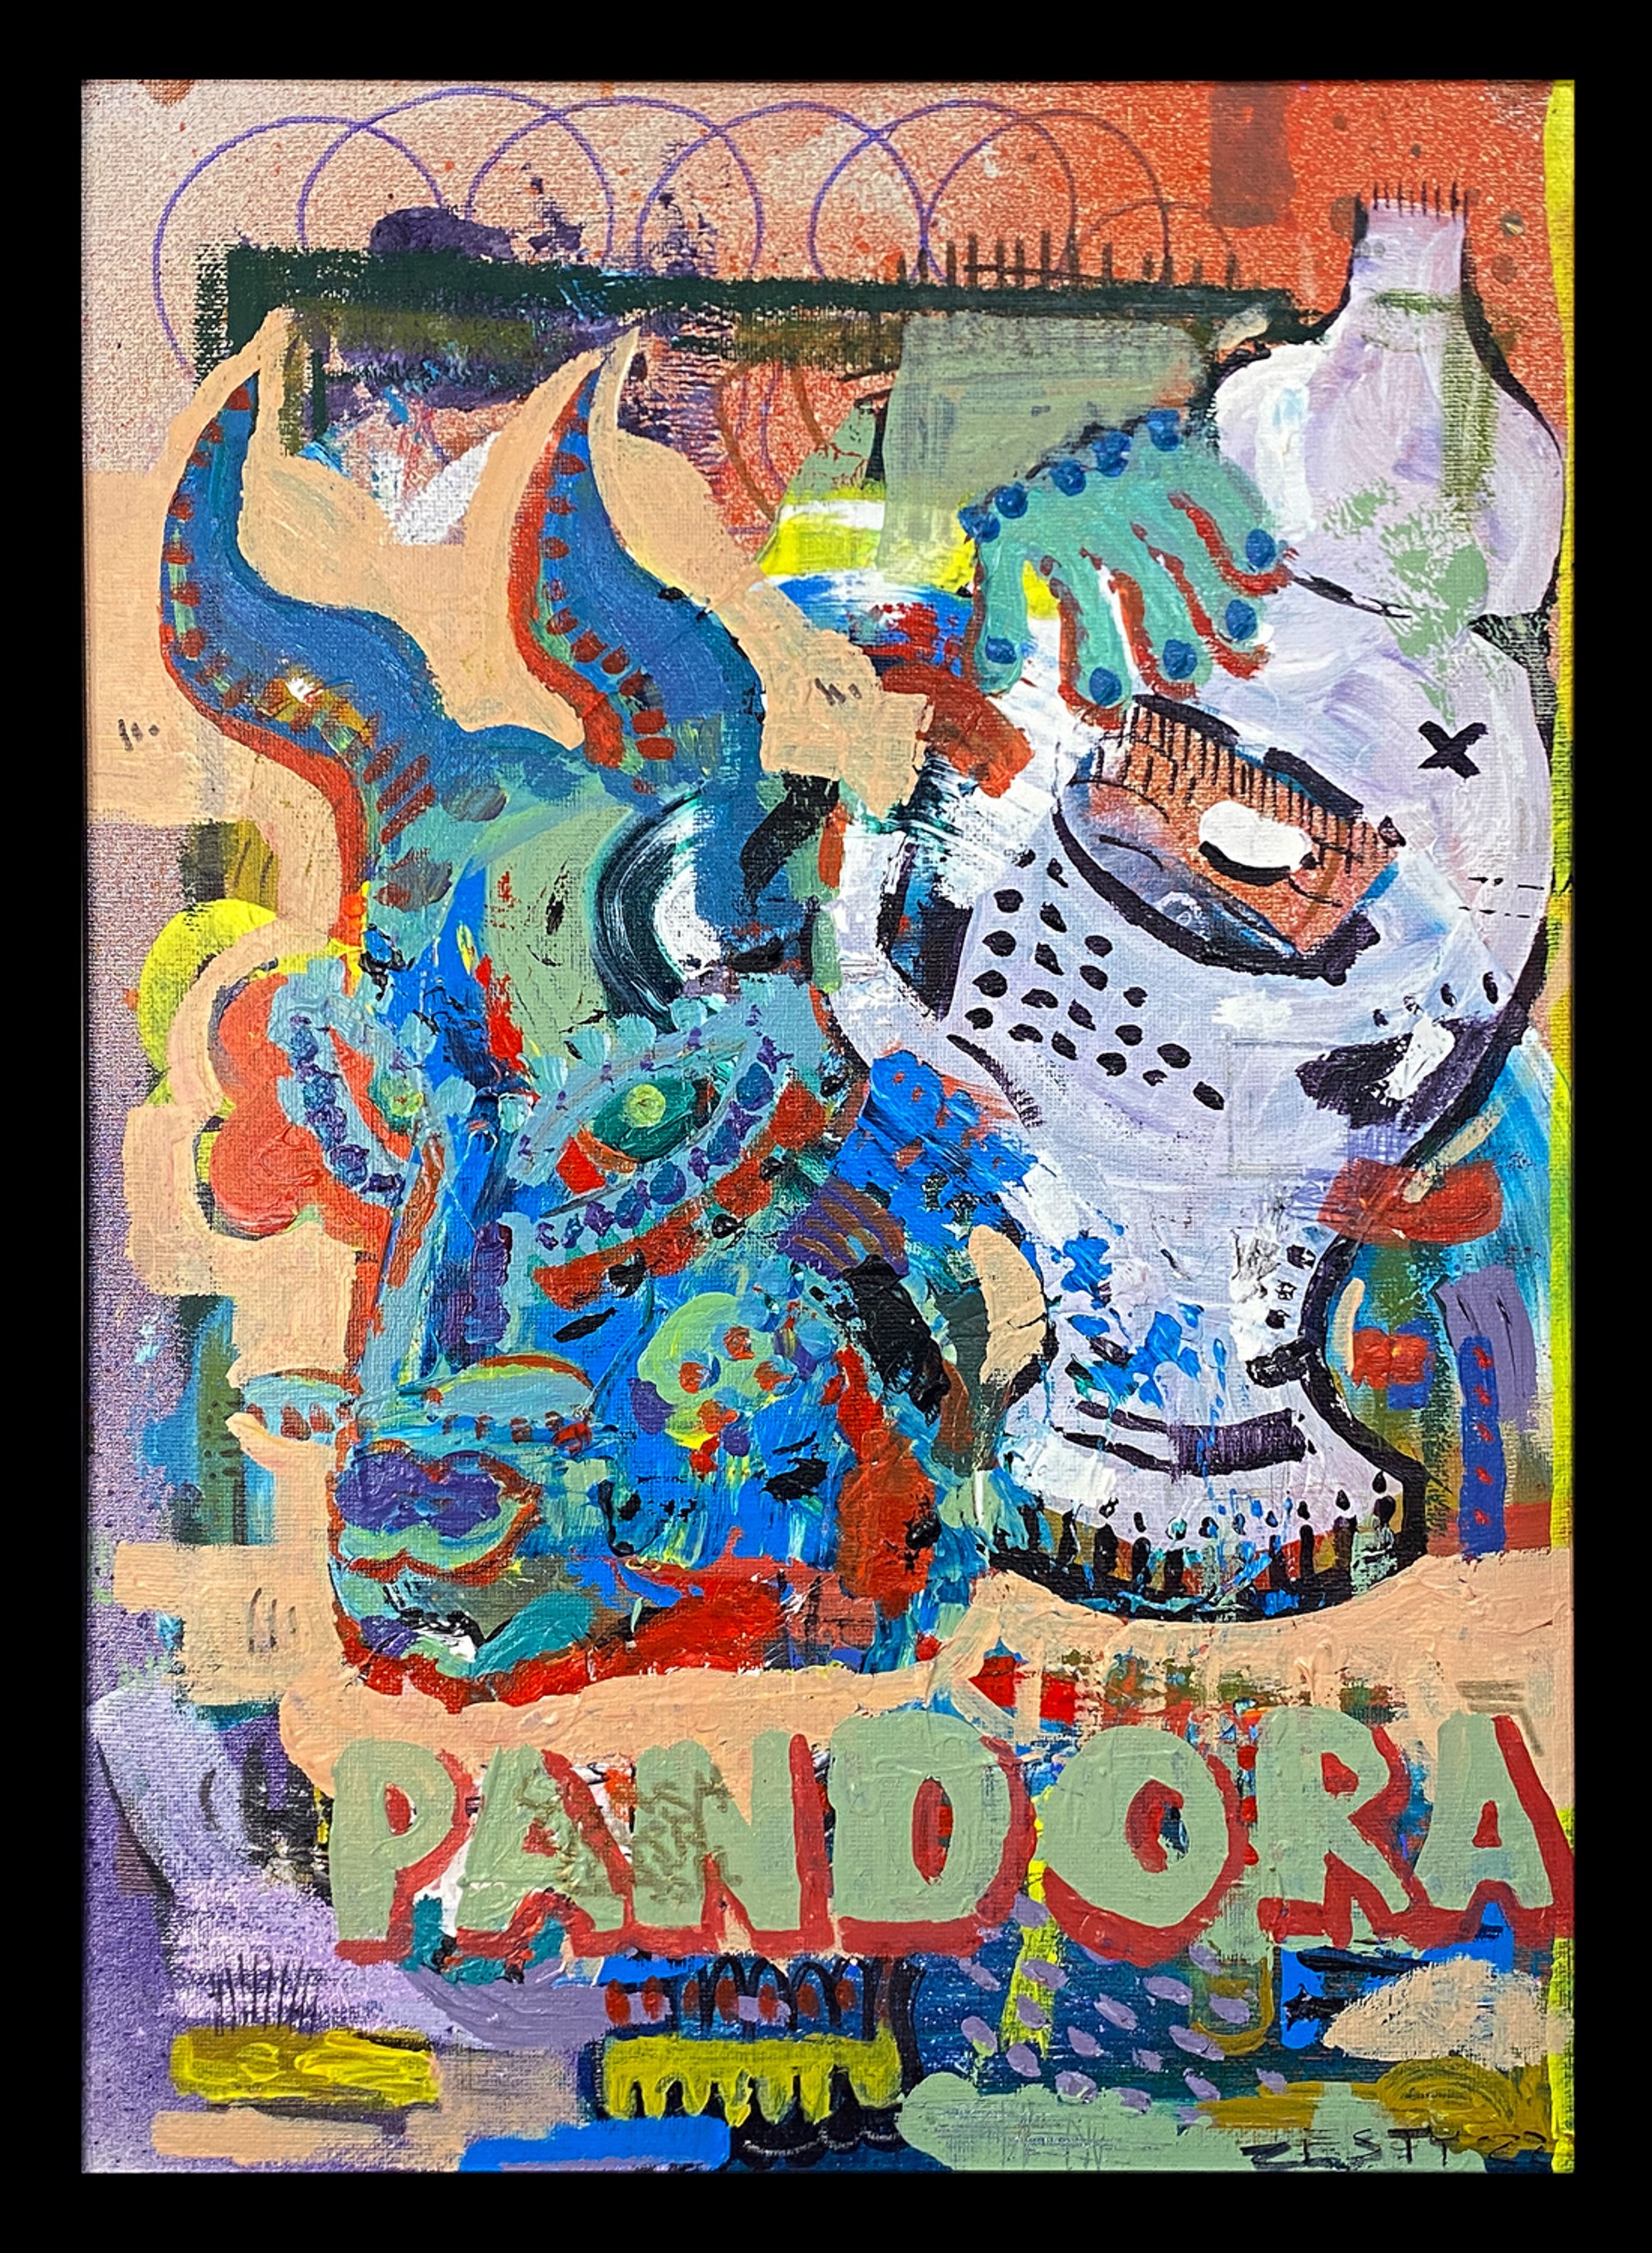 Pandora by Jacob "Zesty" Hartman